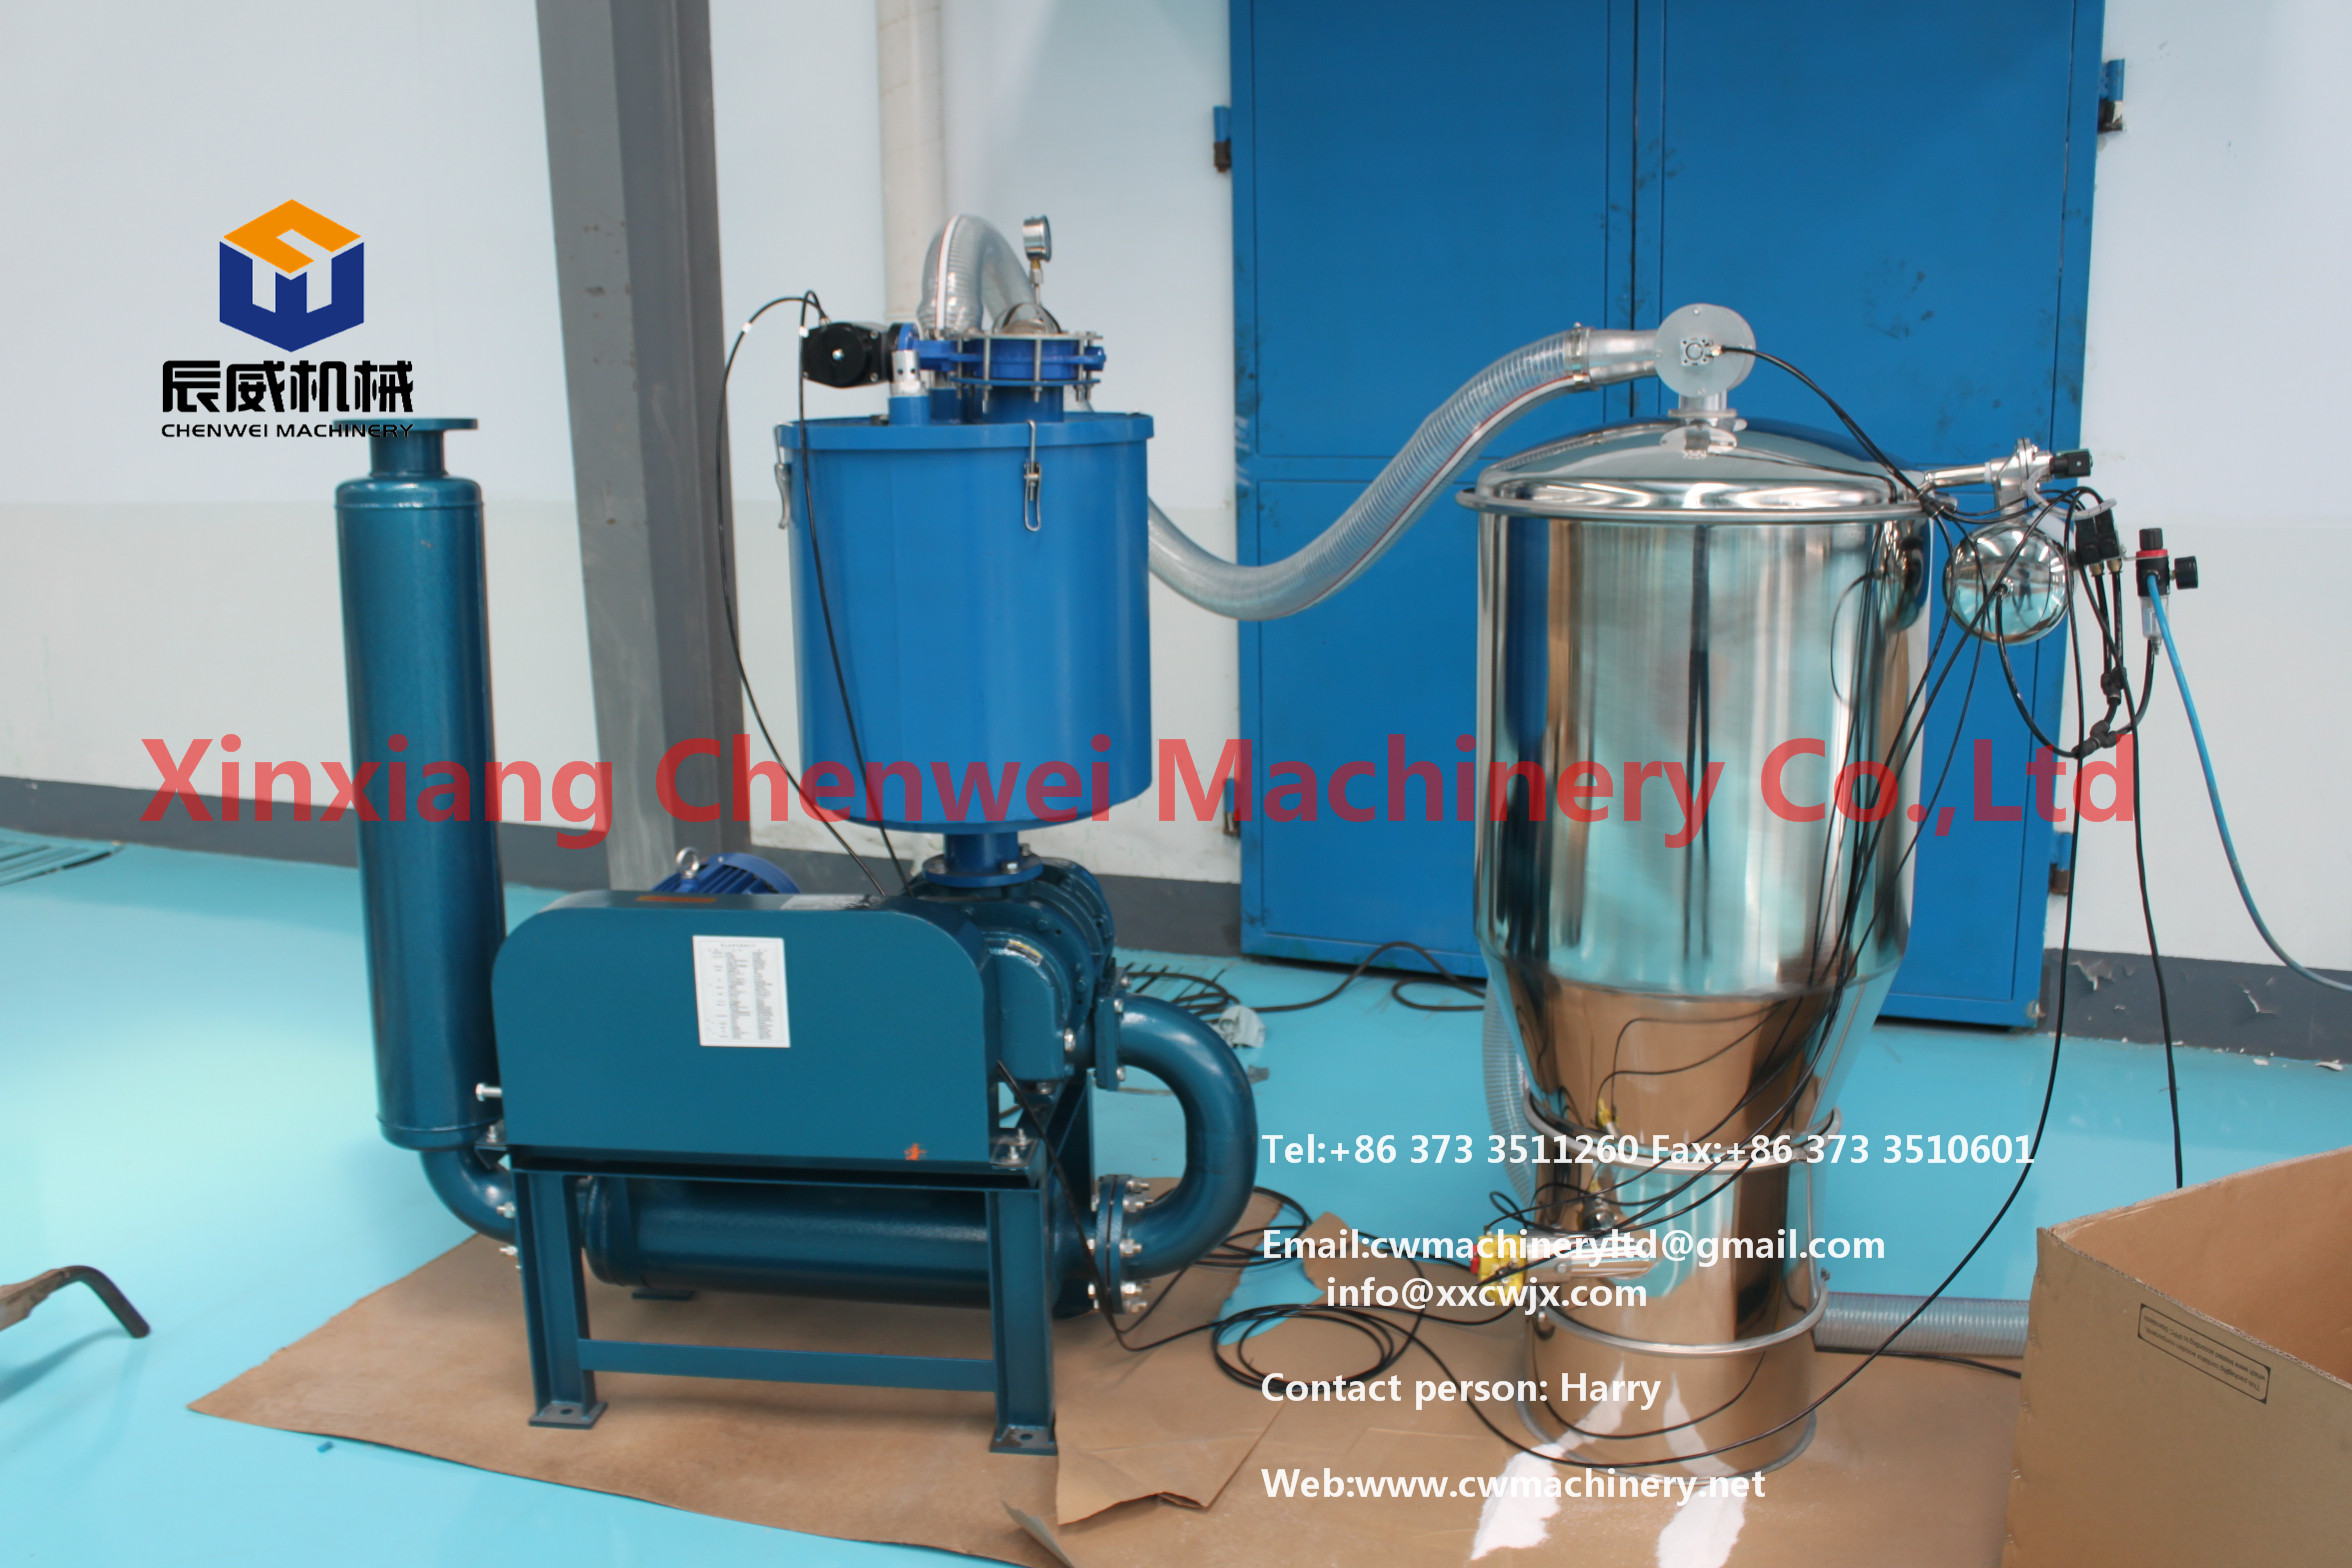 Top quality pneumatic vacuum feeder machine for powder or vacuum transport system